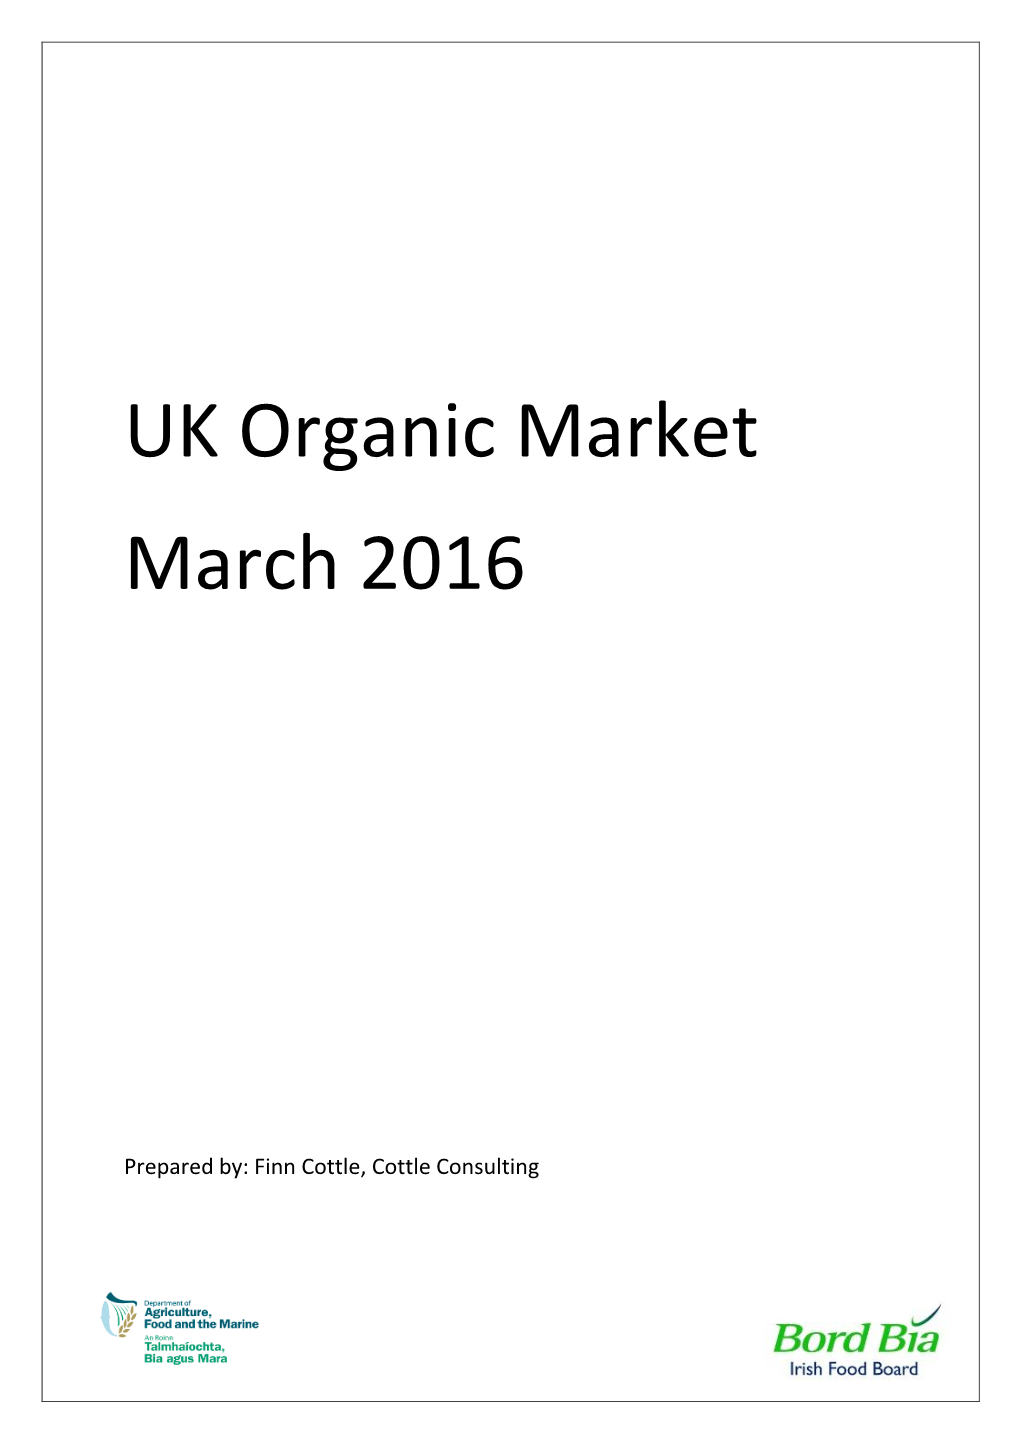 UK Organic Market March 2016